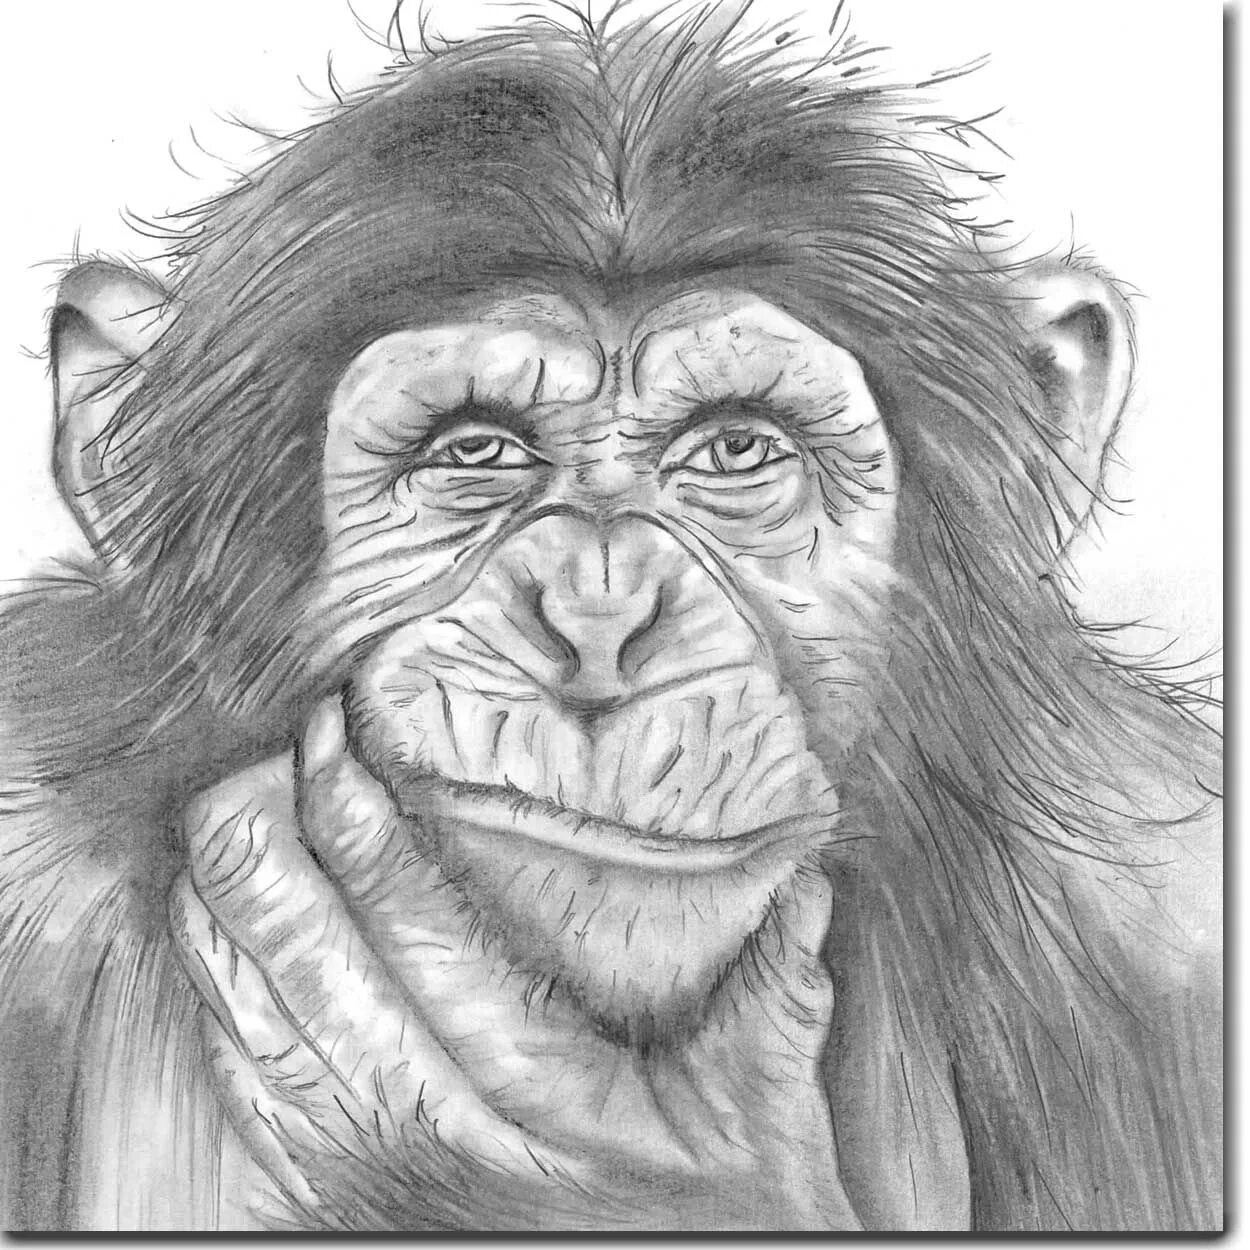 Обезьяна рисунок. Зарисовки обезьян. Рисование обезьяны. Нарисовать обезьяну. Рисунок обезьяны карандашом